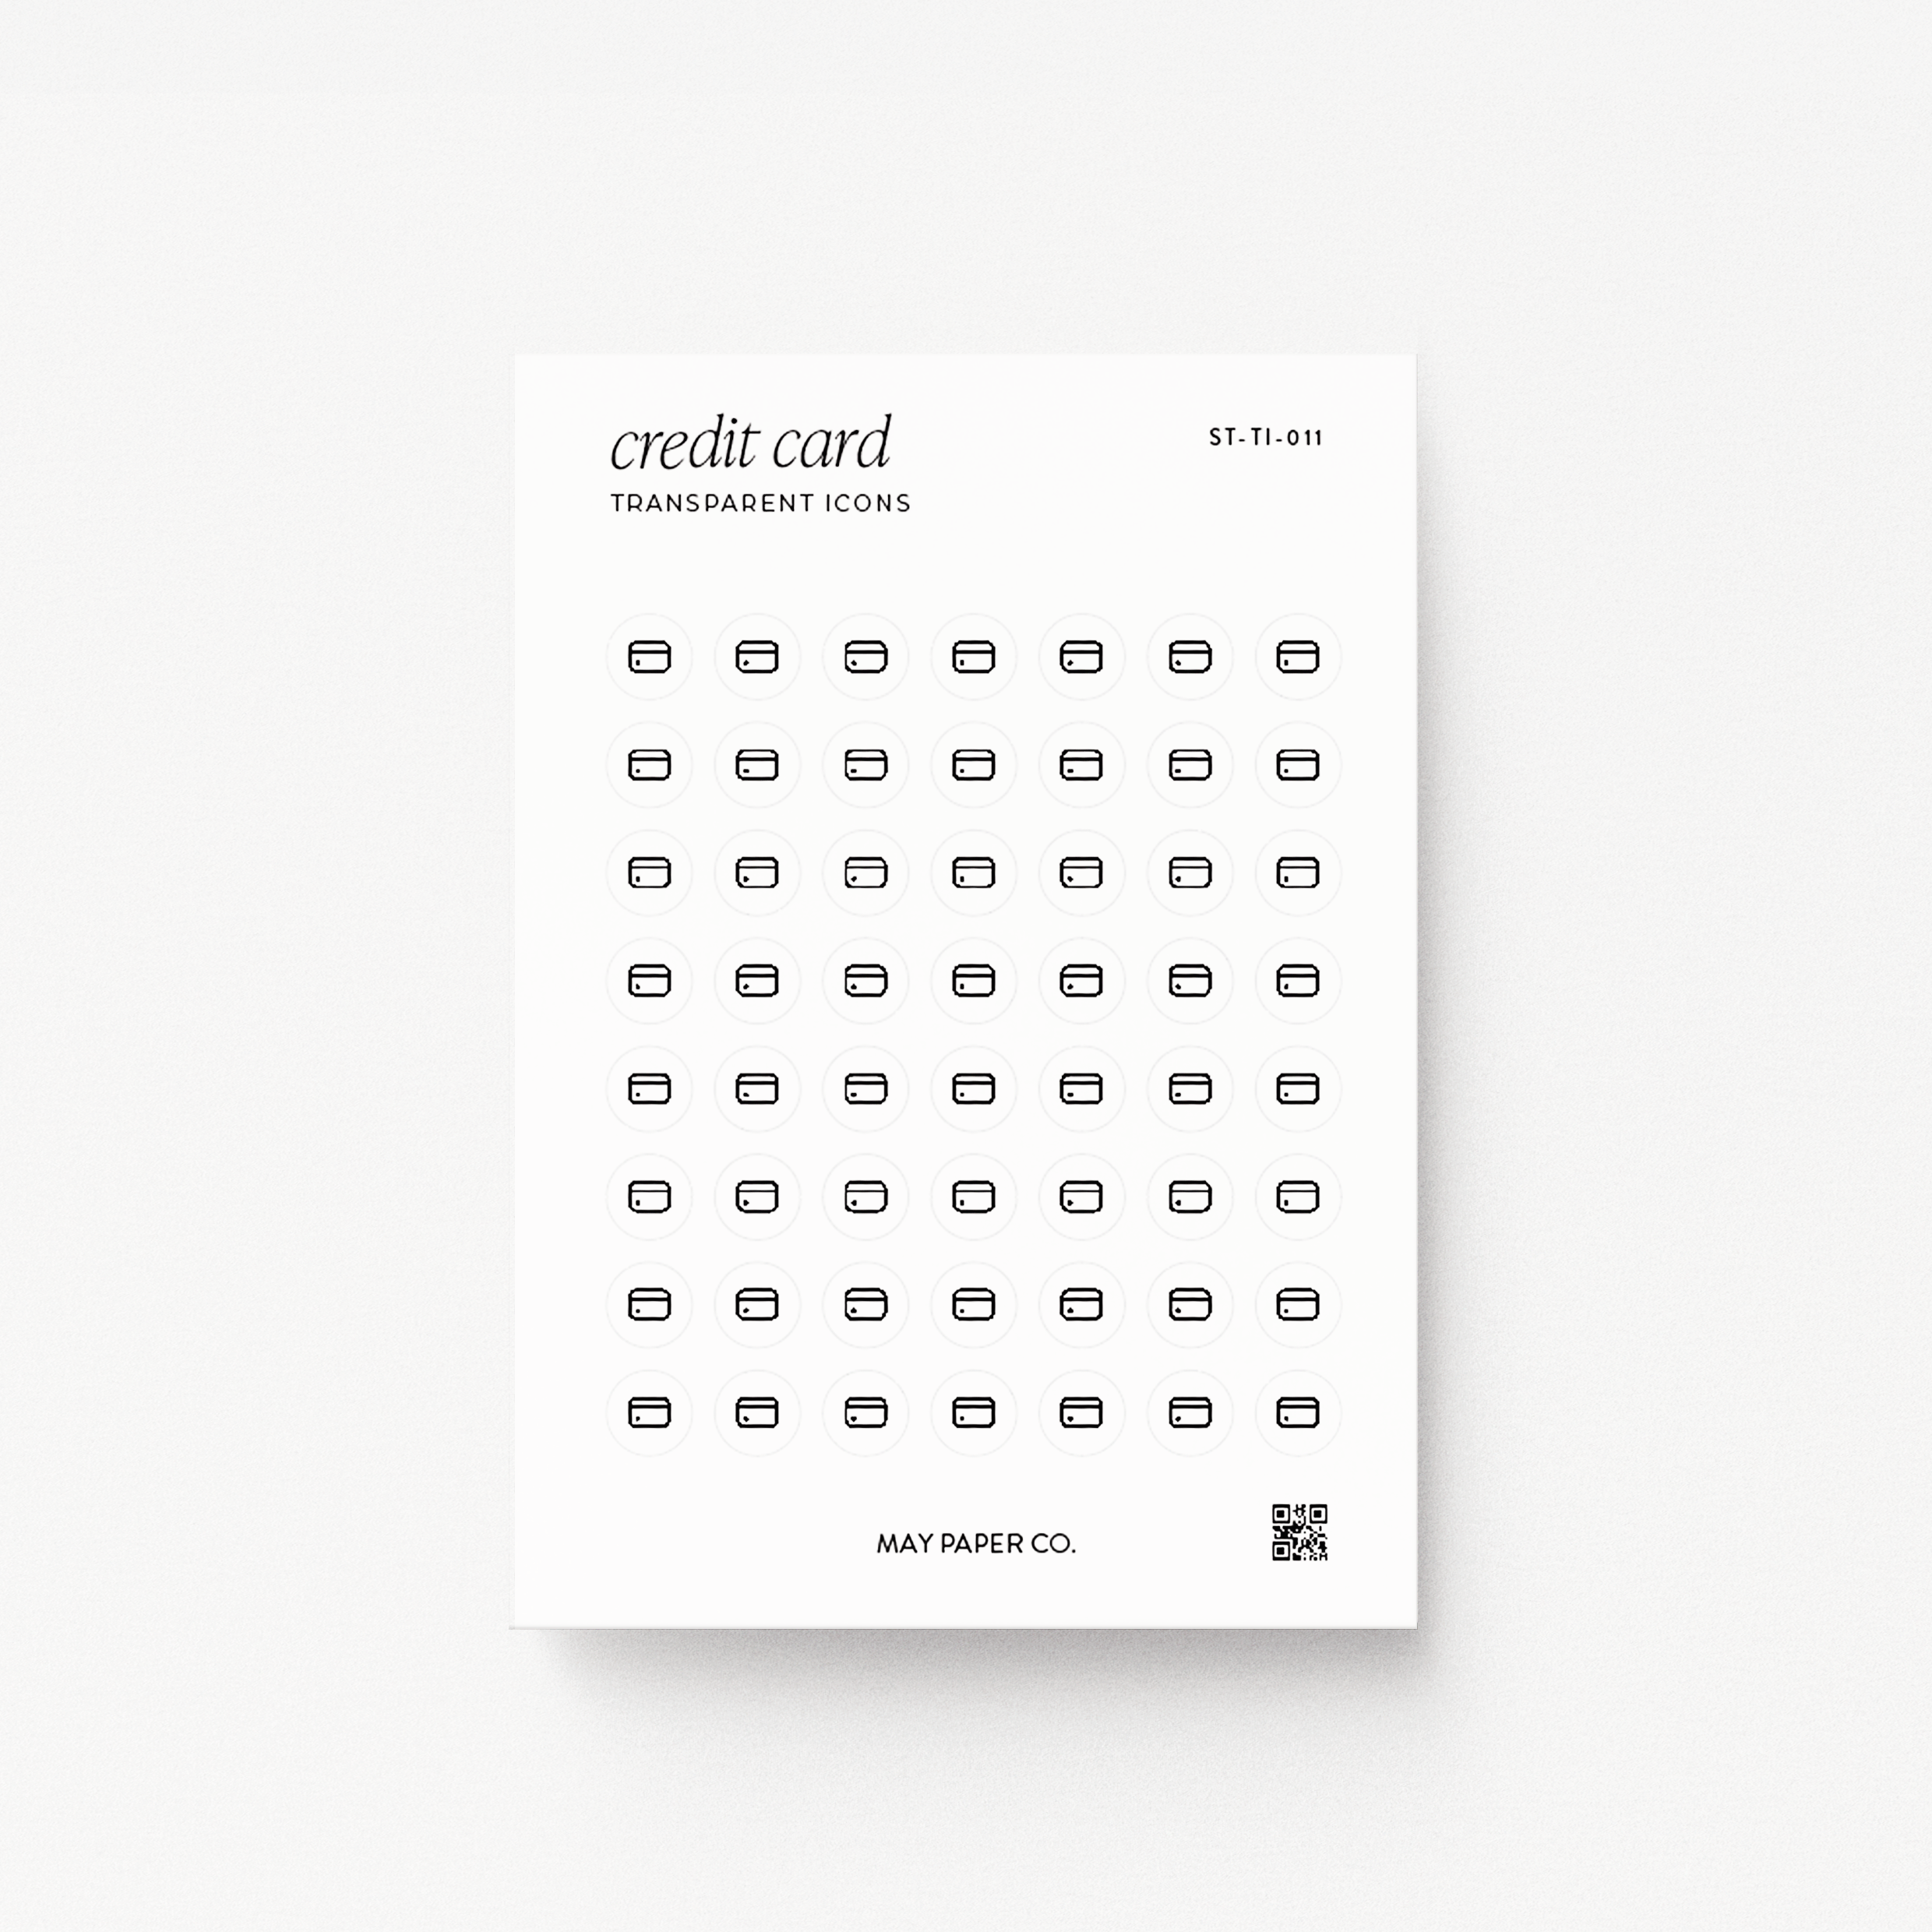 Credit Card | Transparent Sticker Icons